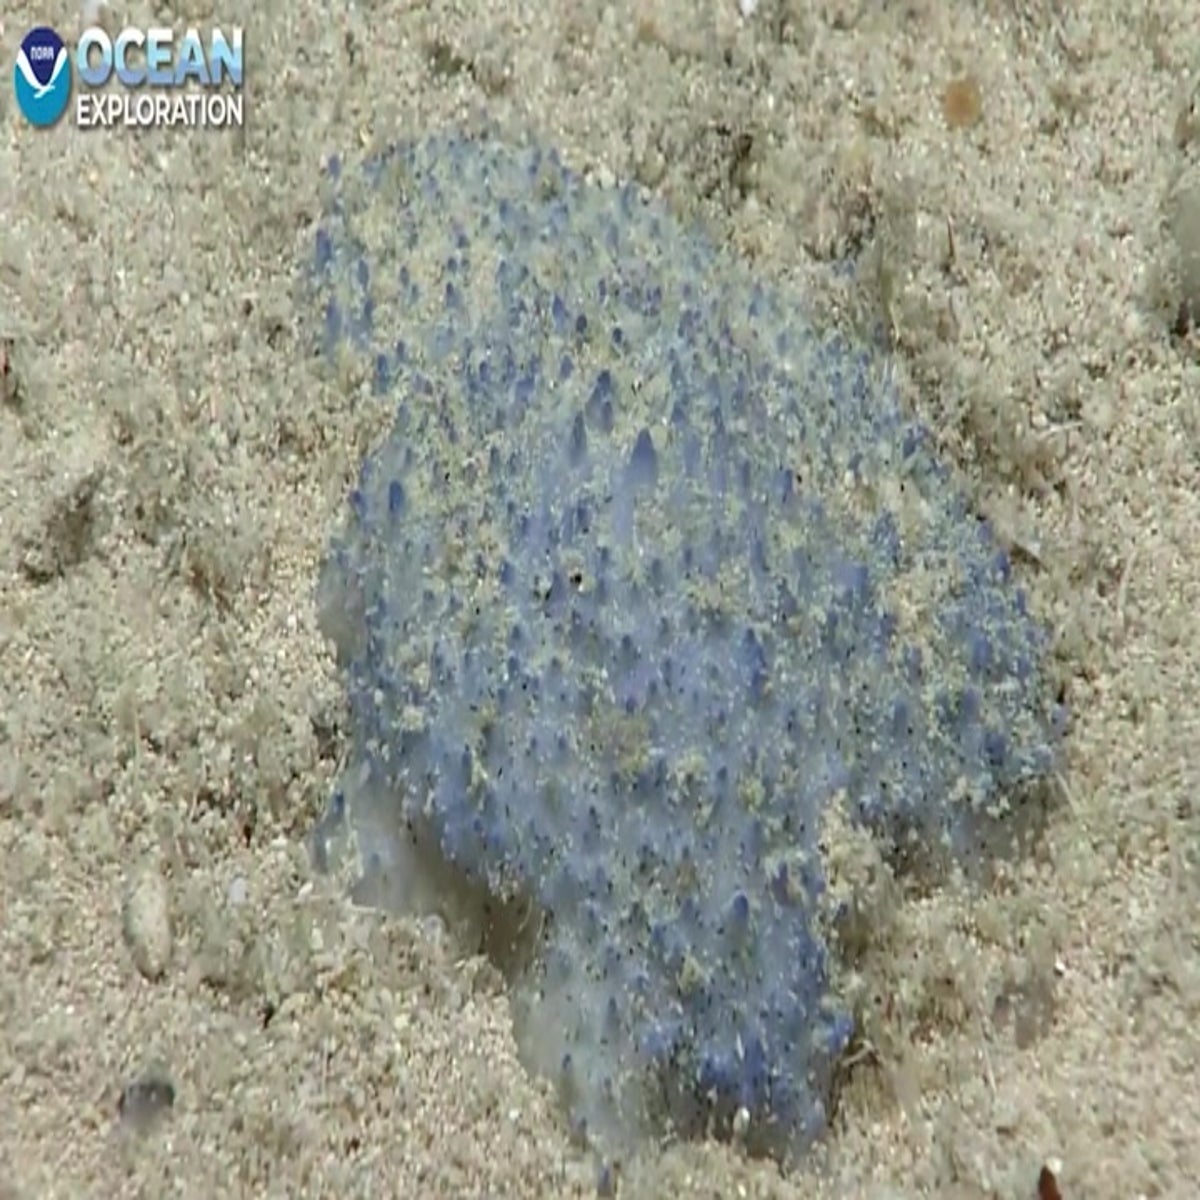 Mystery Blob-like Creature of 'Blue Goo' On Ocean Floor Baffles Scientists